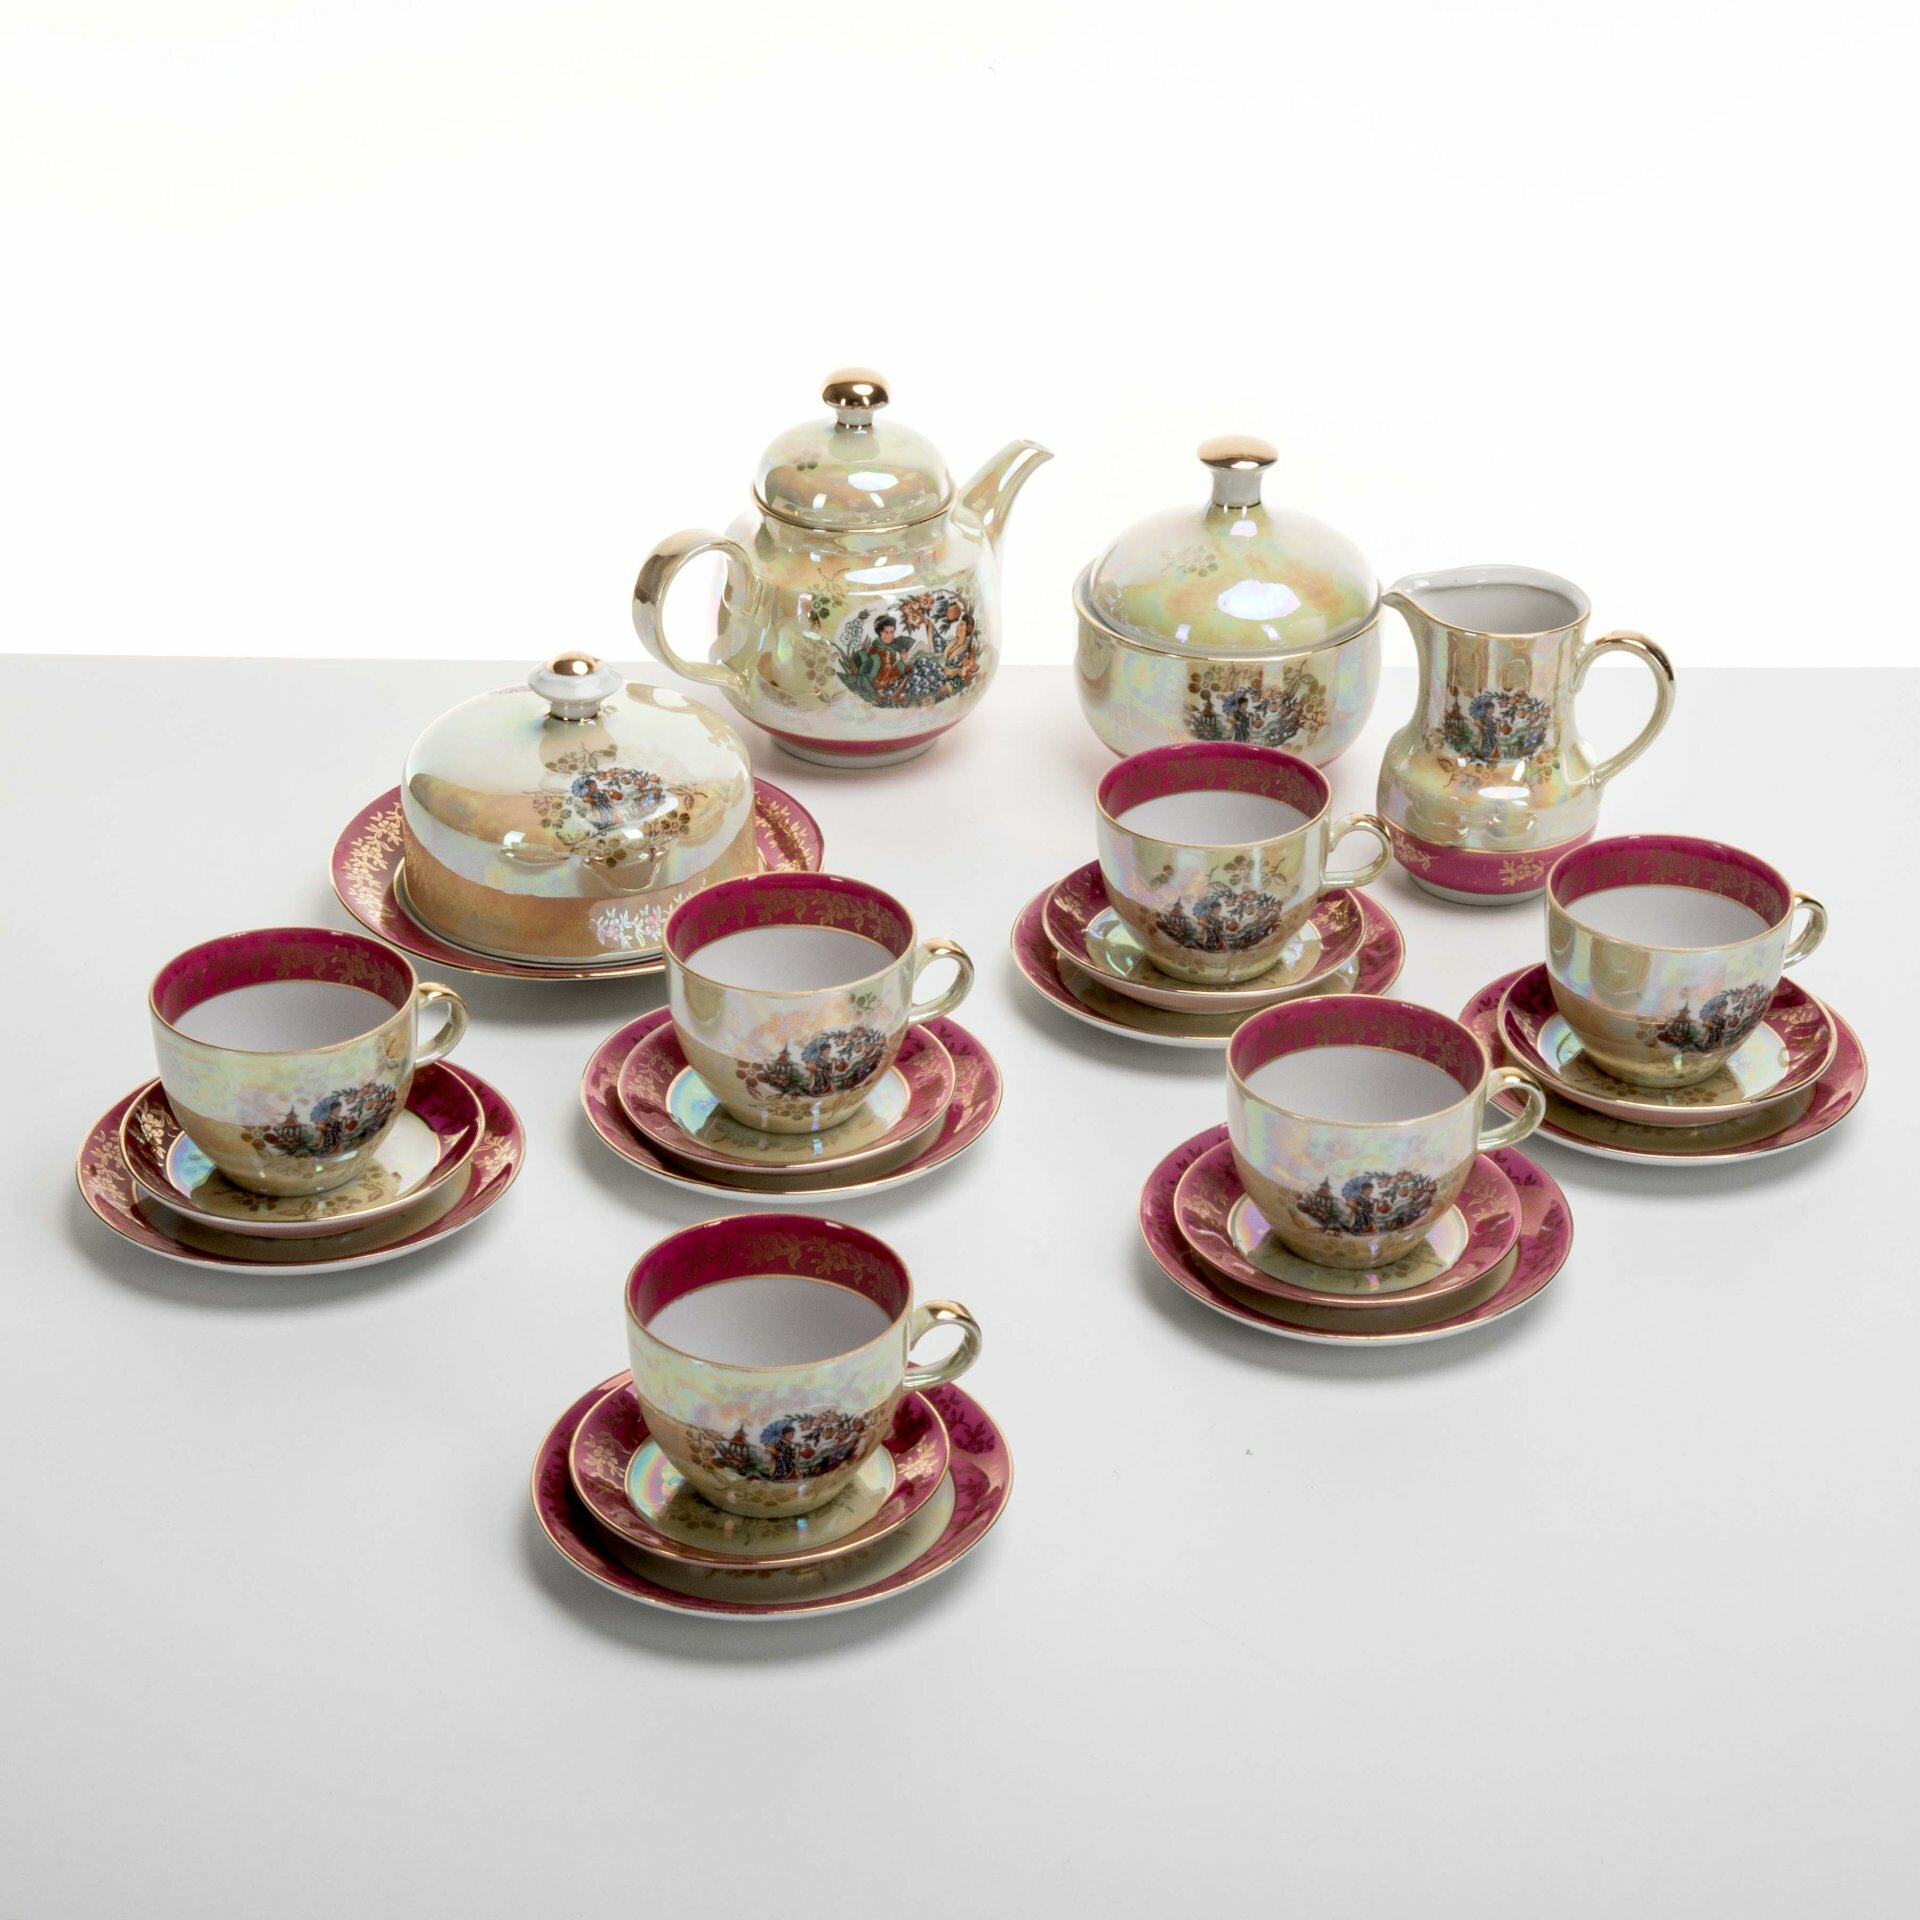 Сервиз чайный на 6 персон в стиле шинуазри "Мадонна" (22 предмета), фарфор, люстр